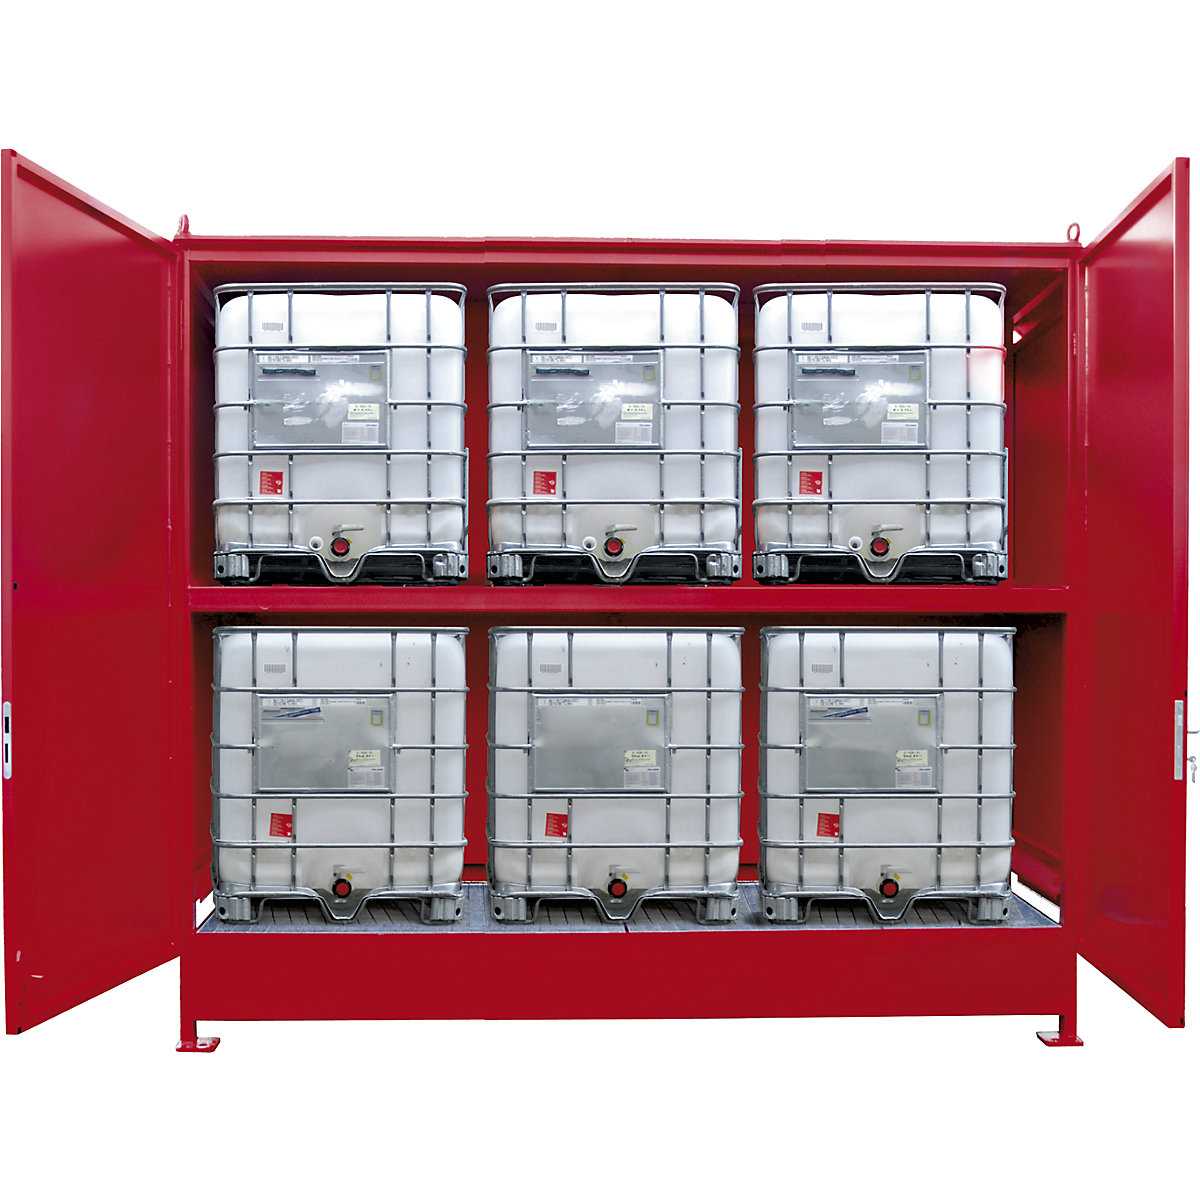 Regalni kontejner za opasne tvari – eurokraft pro, kapacitet 6 x kontejnera IBC/KTC volumena 1000 l, u crvenoj boji-3